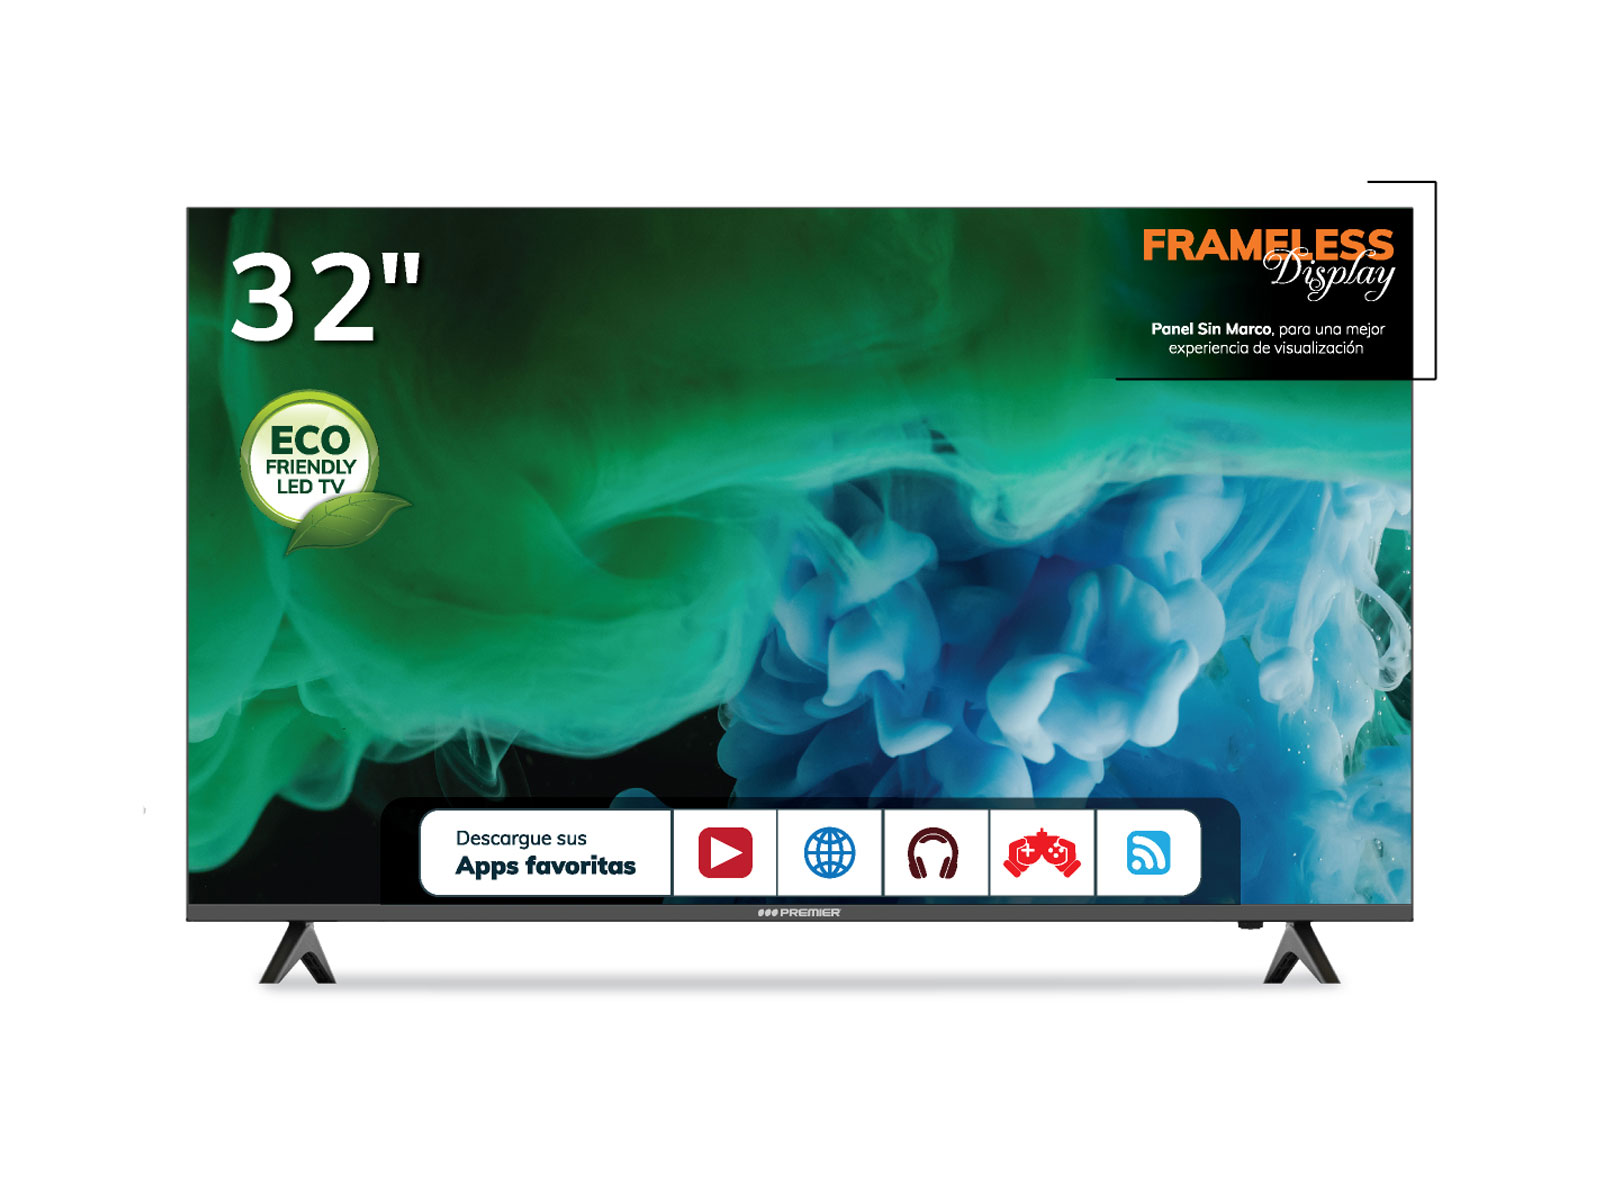 Tiendas Premier Panamá  Tv 85” uhd webos smart c/dvb-t2, c/r de